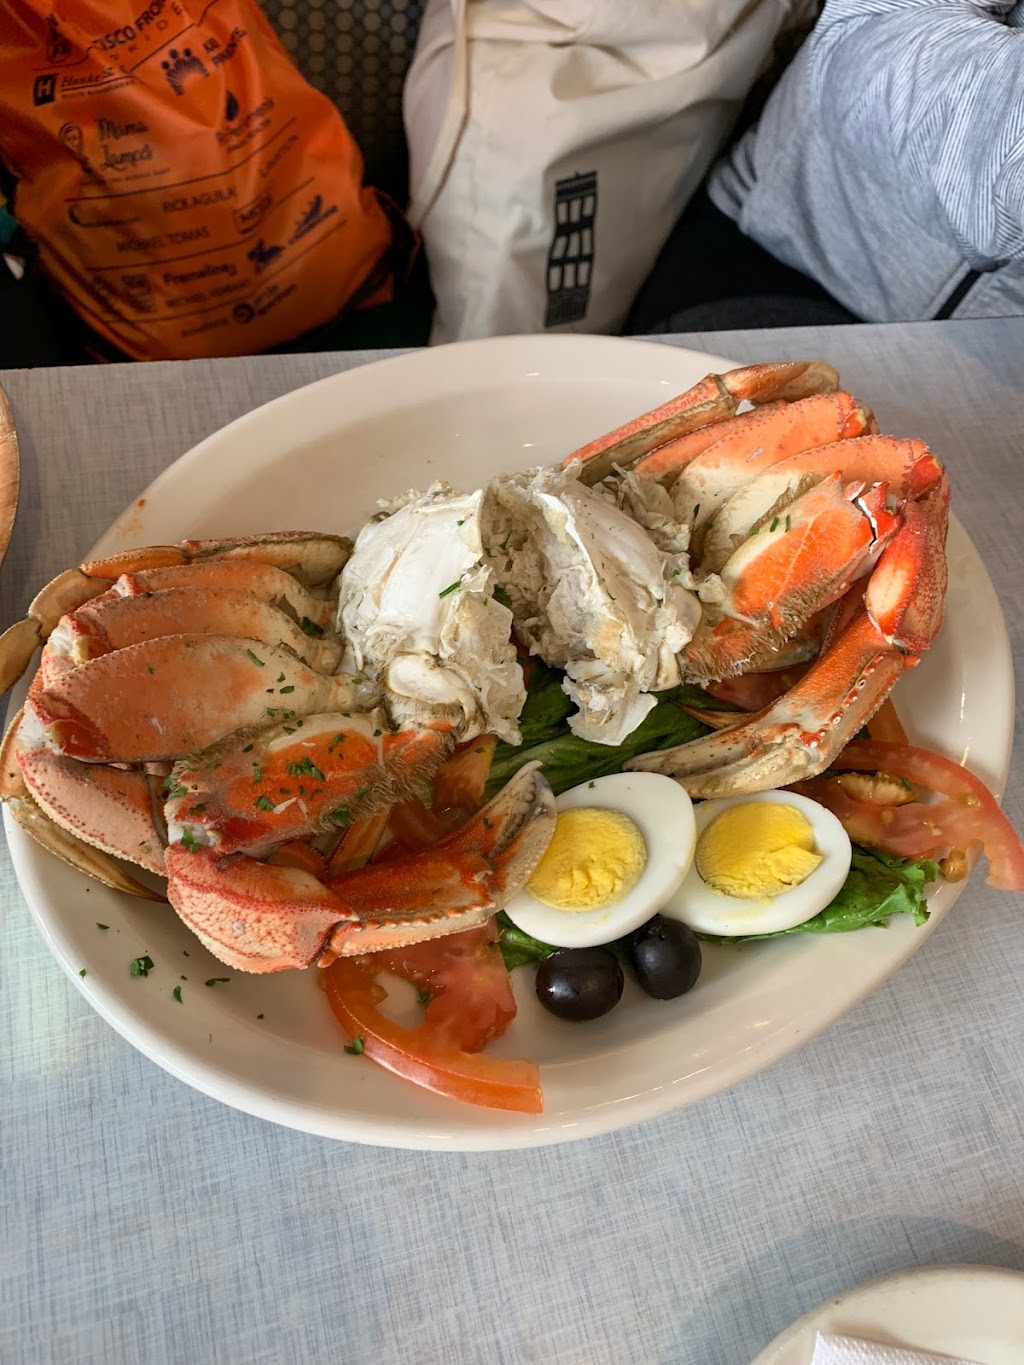 Princeton Seafood Market & Restaurant | 9 Johnson Pier, Half Moon Bay, CA 94019 | Phone: (650) 726-2722